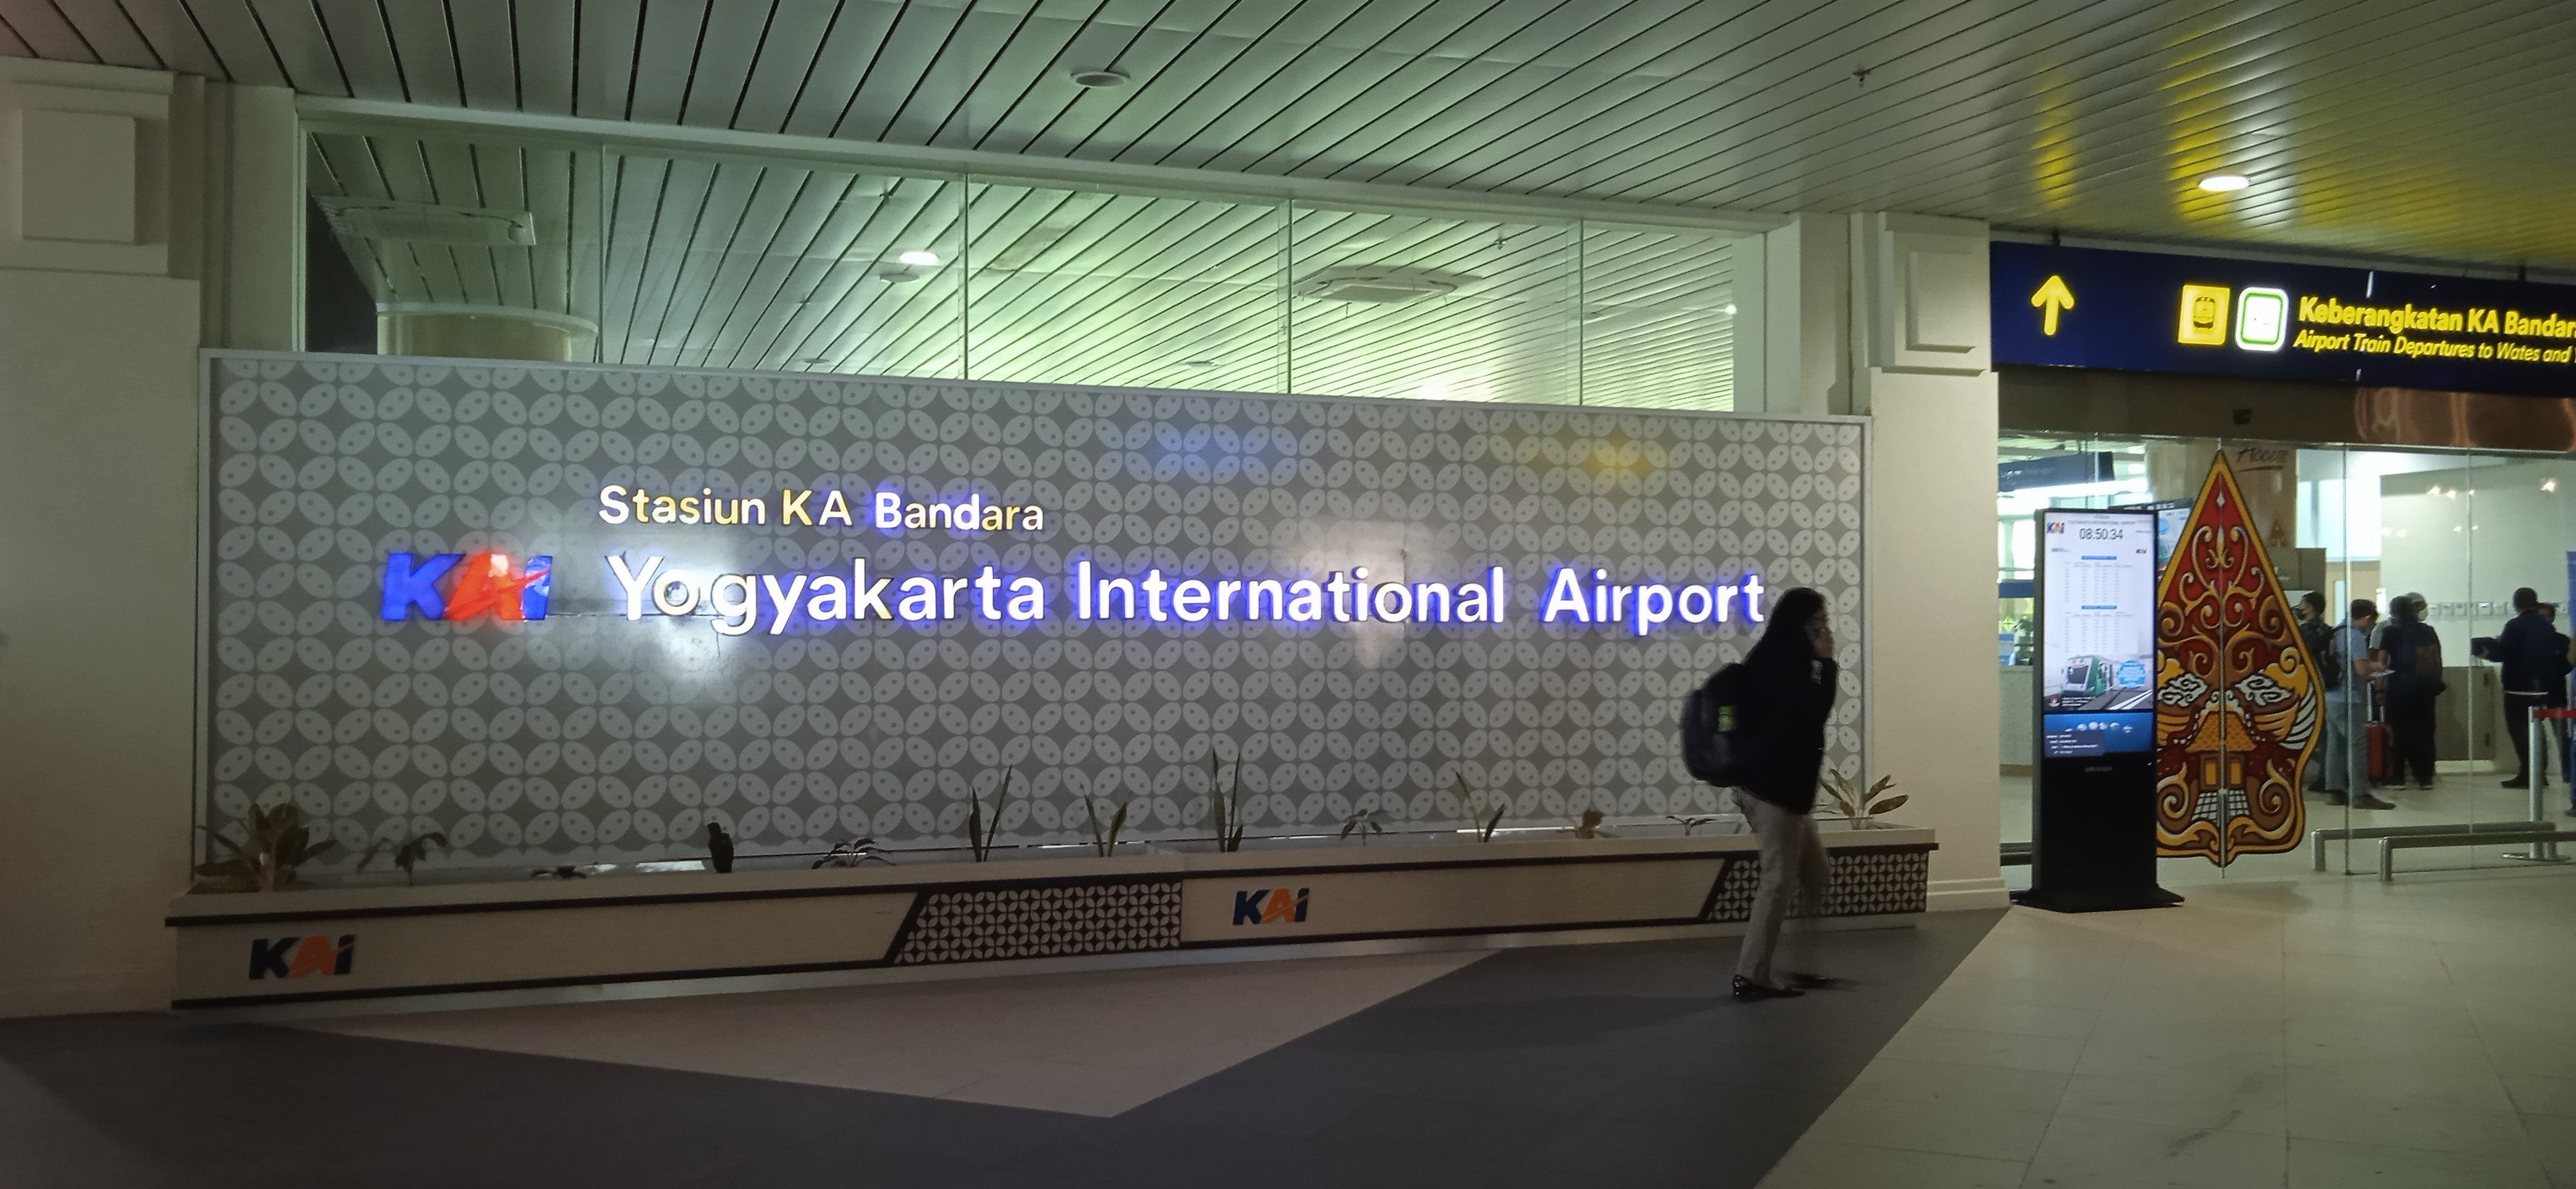 Ini Jadwal Kereta Api Stasiun Tugu-Bandara Internasional Yogyakarta dan Tarifnya 